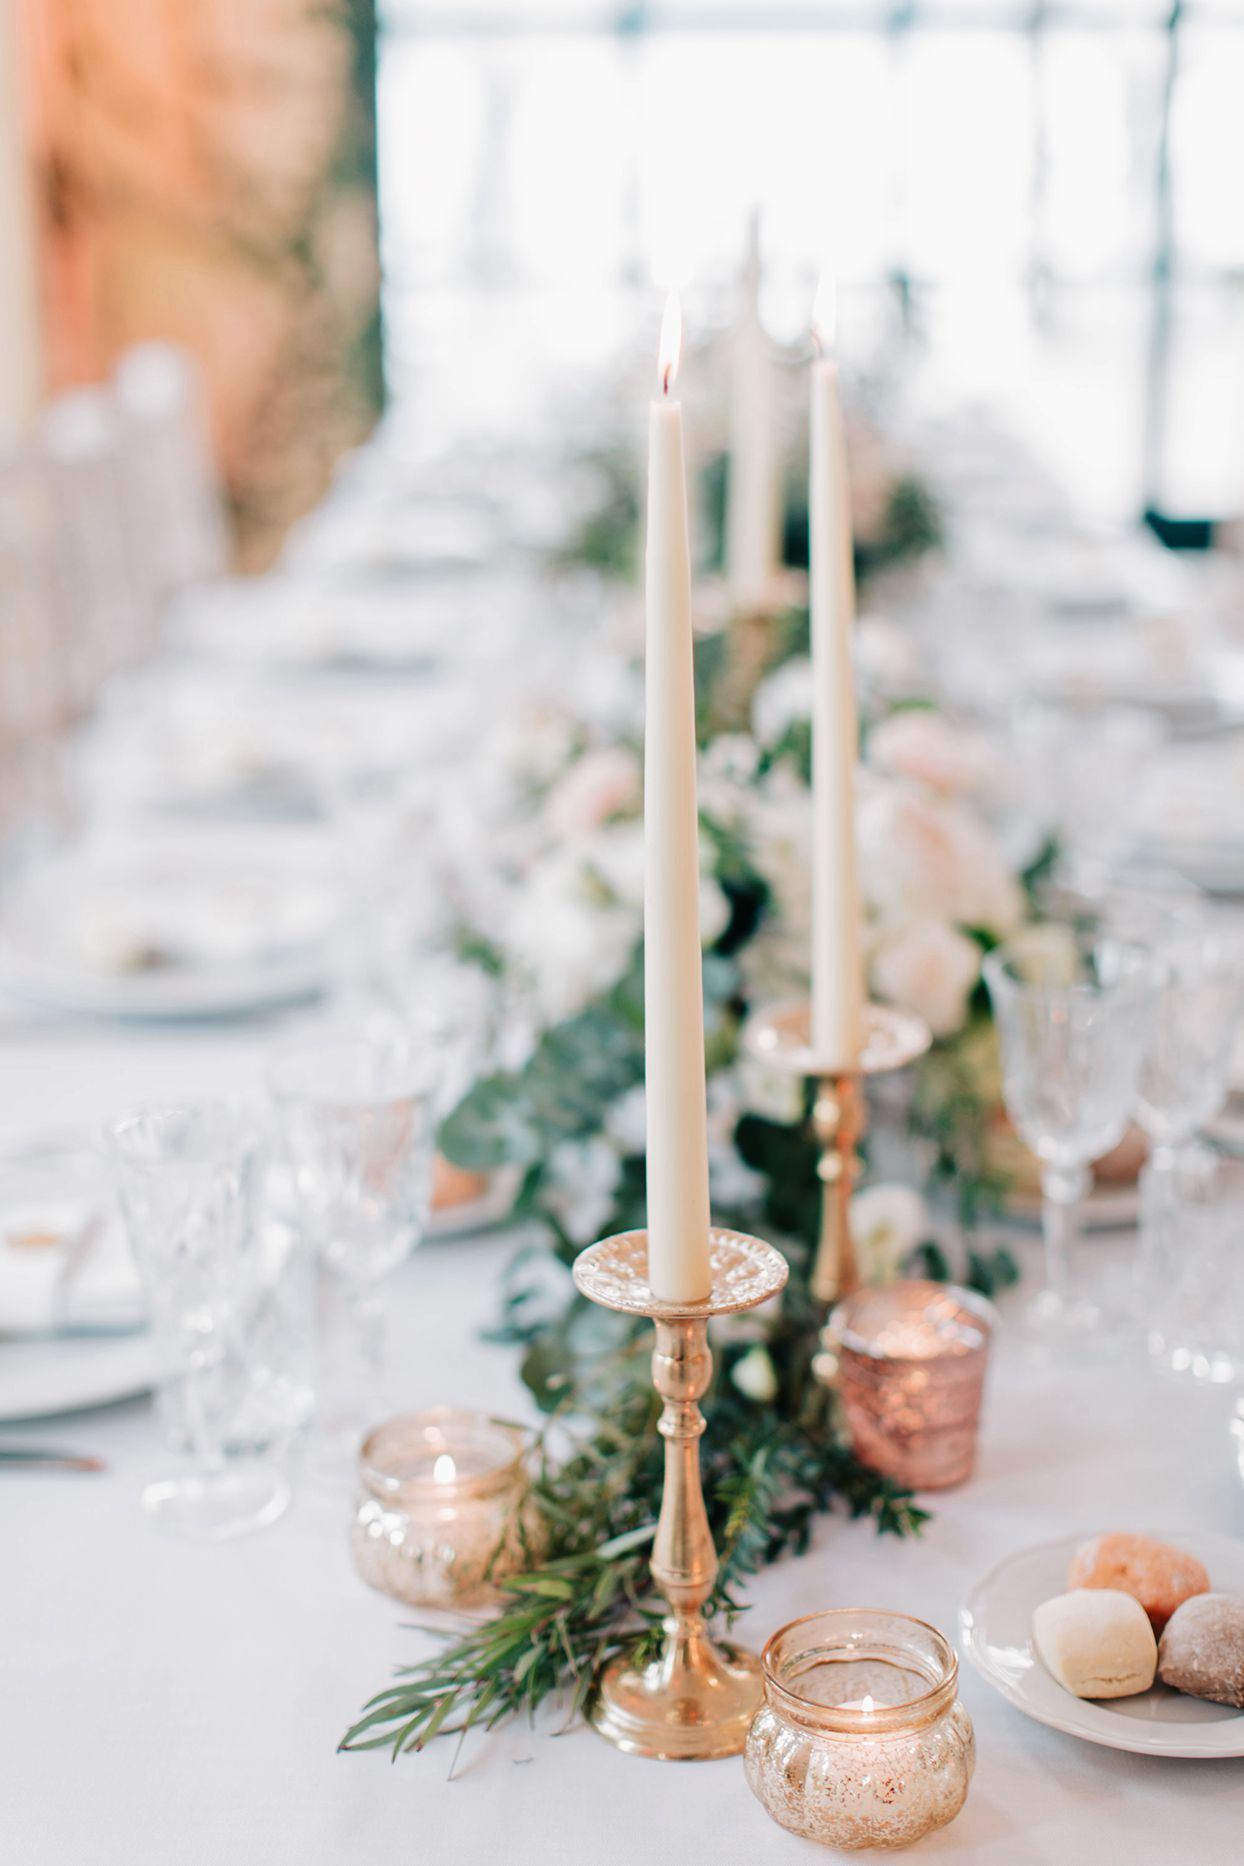 kiira arthur wedding reception candles on table